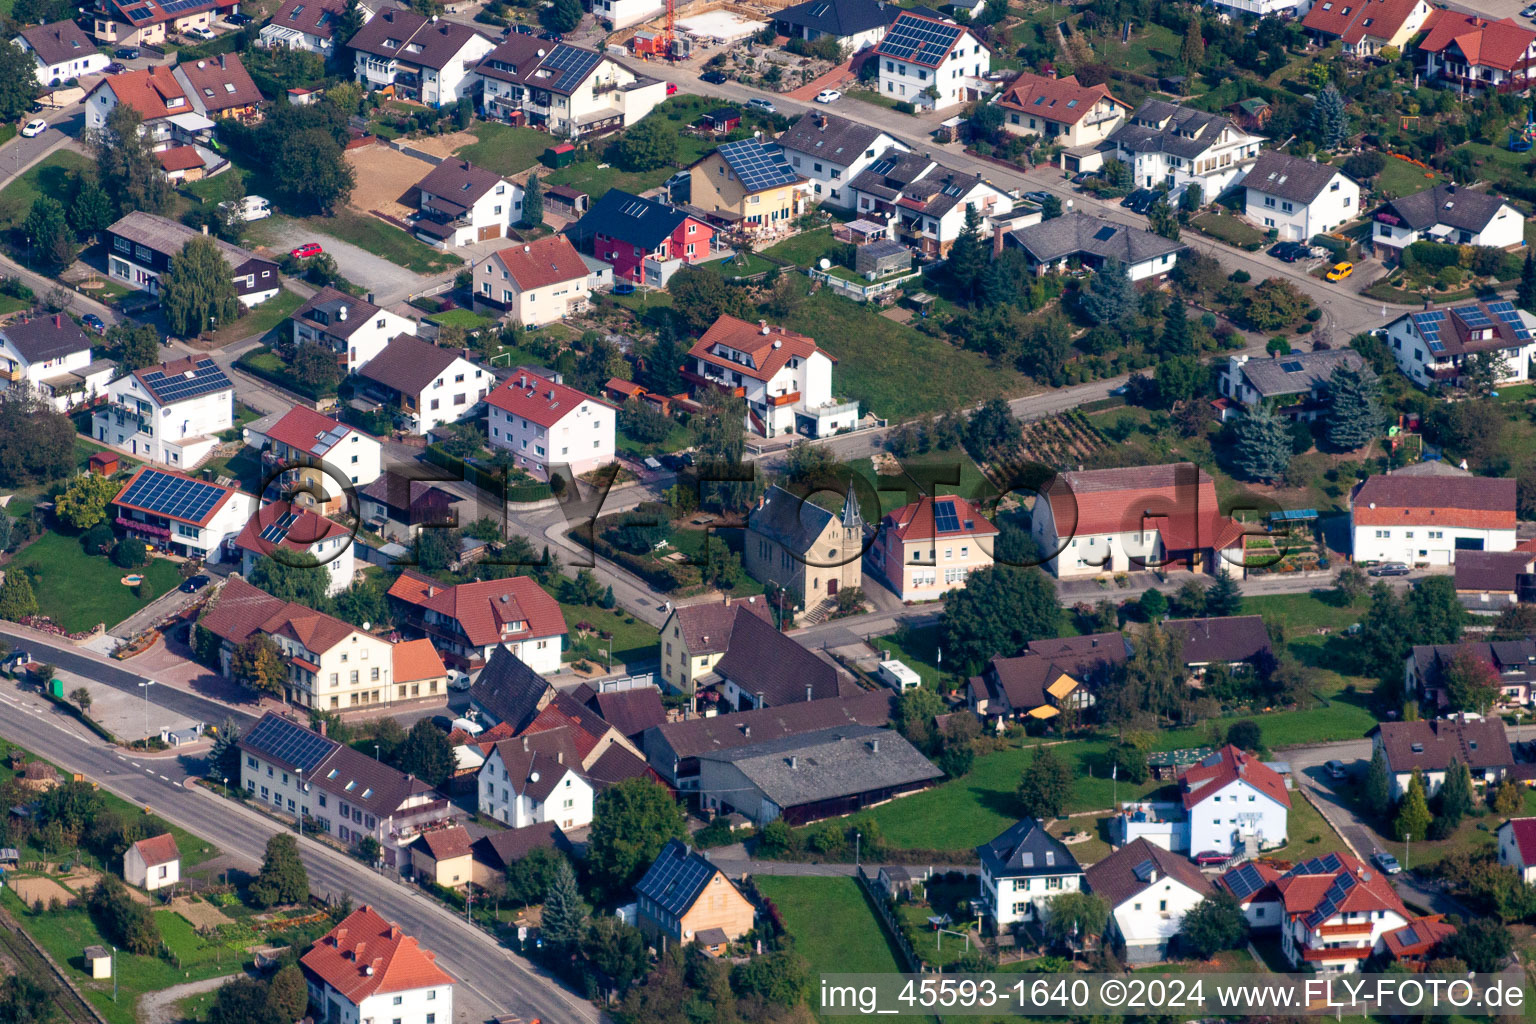 Settlement area in the district Untergimpern in Neckarbischofsheim in the state Baden-Wurttemberg, Germany